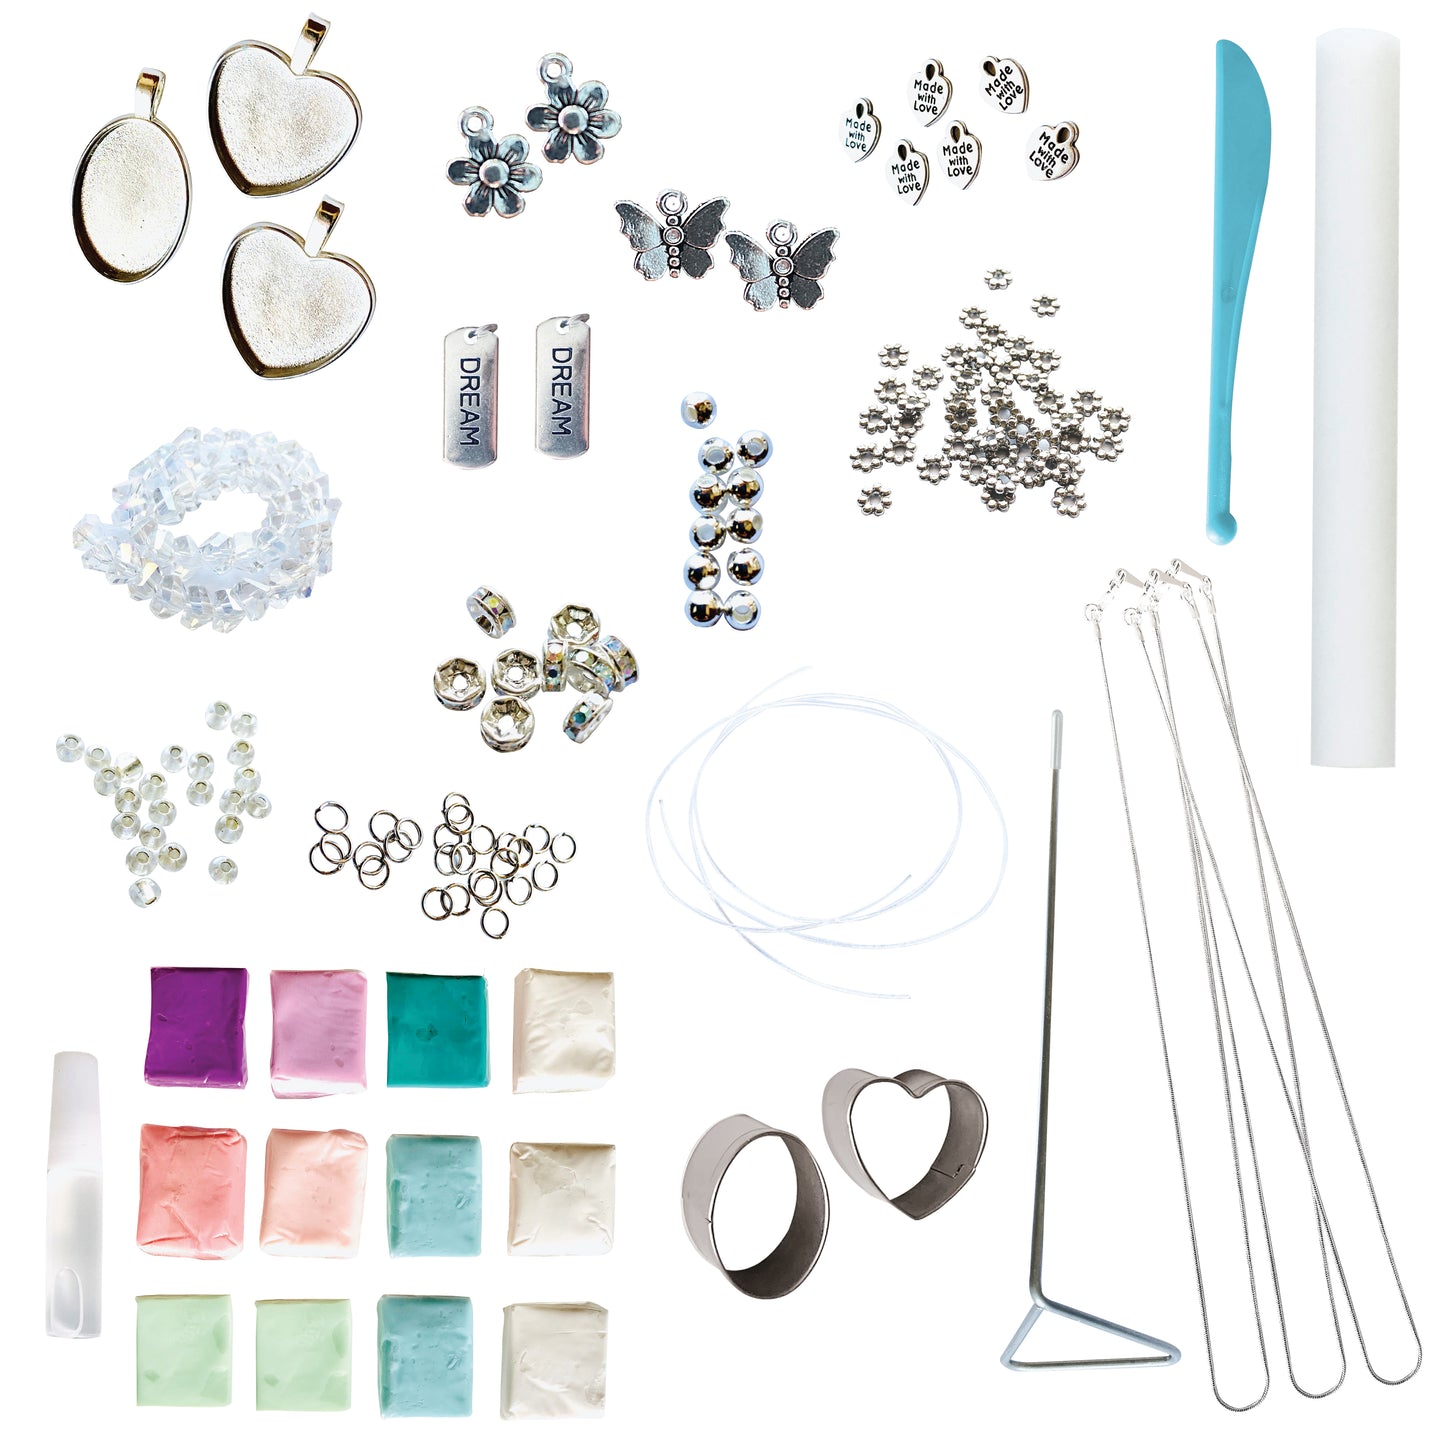 DIY Clay Jewelry - Craft Kit